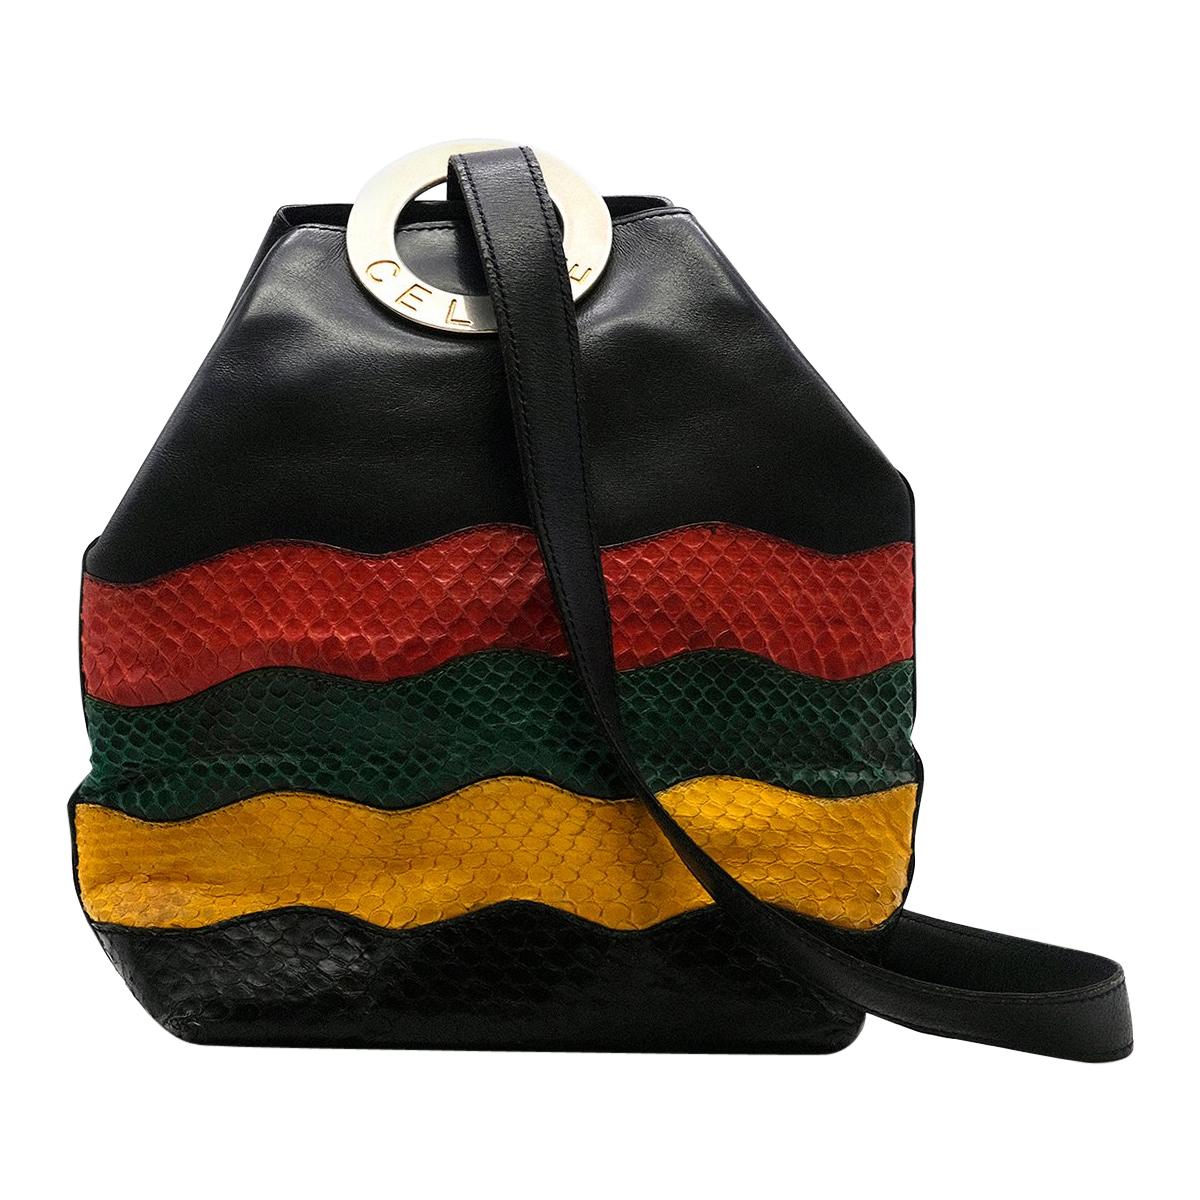 Celine Multi Colored Leather & Python Skin Bucket Bag